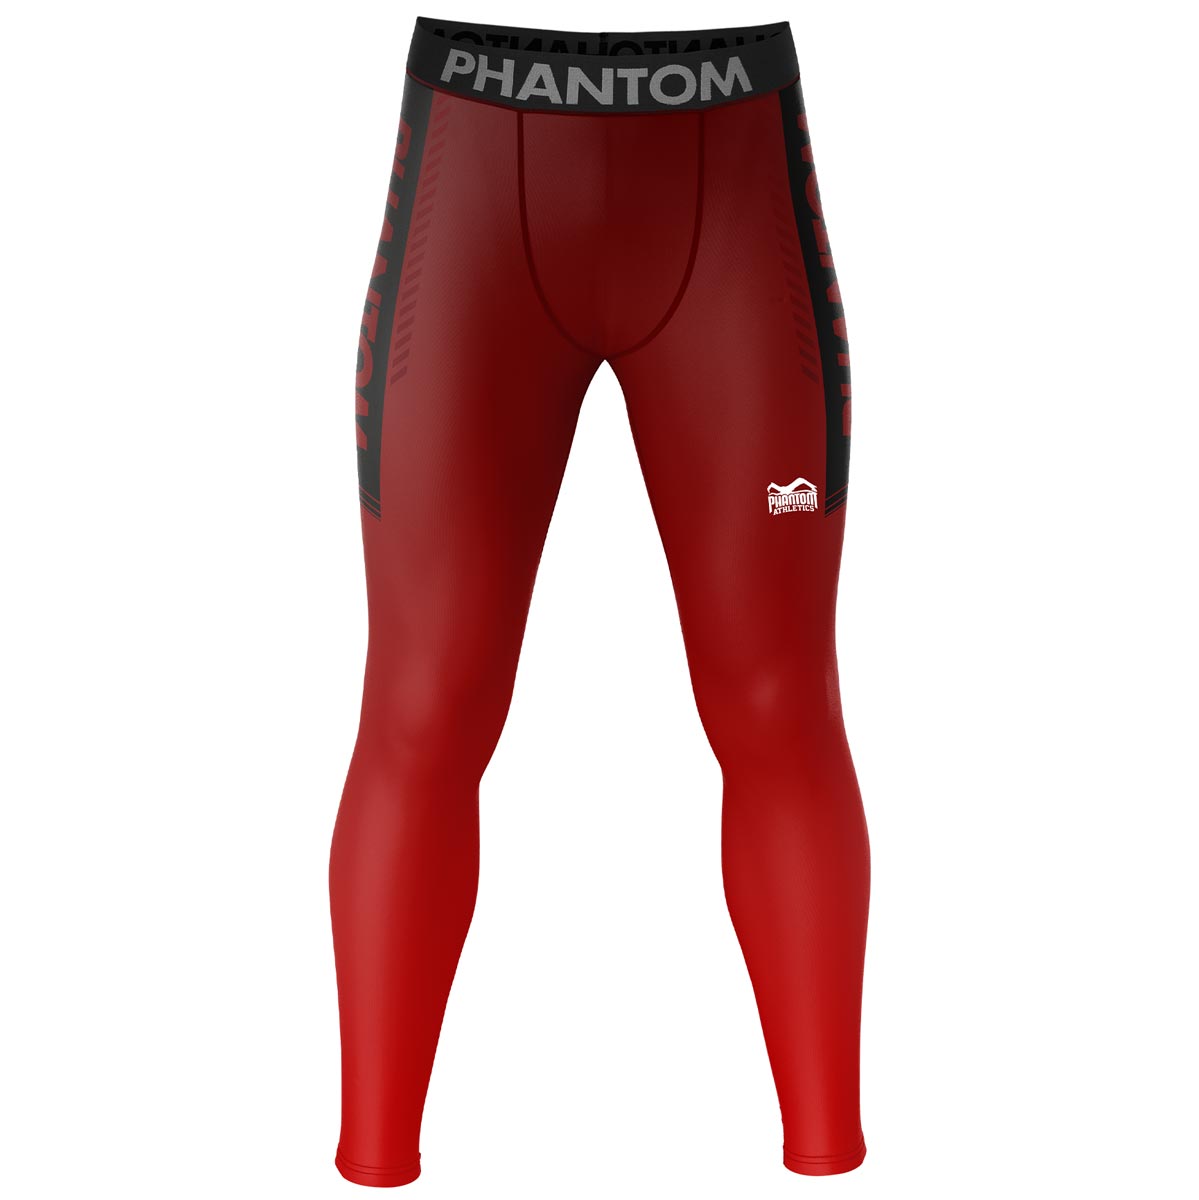 Phantom martial arts leggings for Nogi BJJ, wrestling, MMA and other grappling sports.